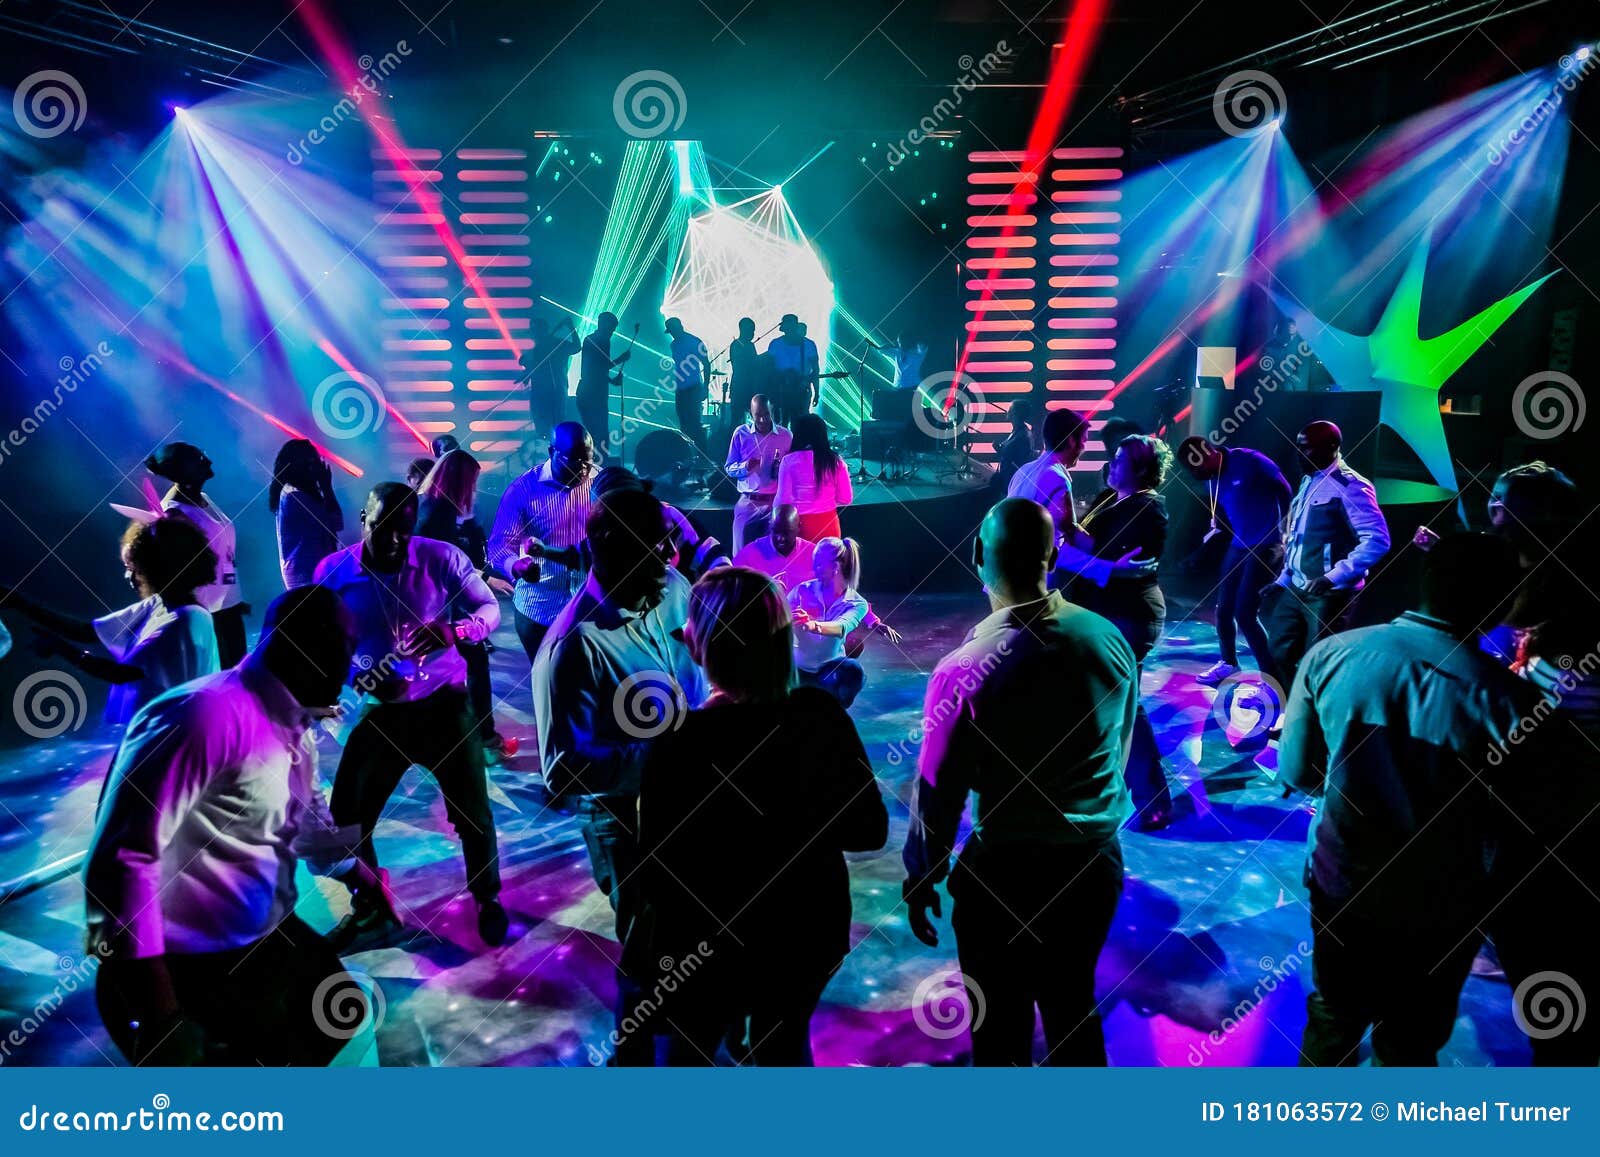 Group of People Dancing on a Dance Floor in Dark Night Club Environment ...